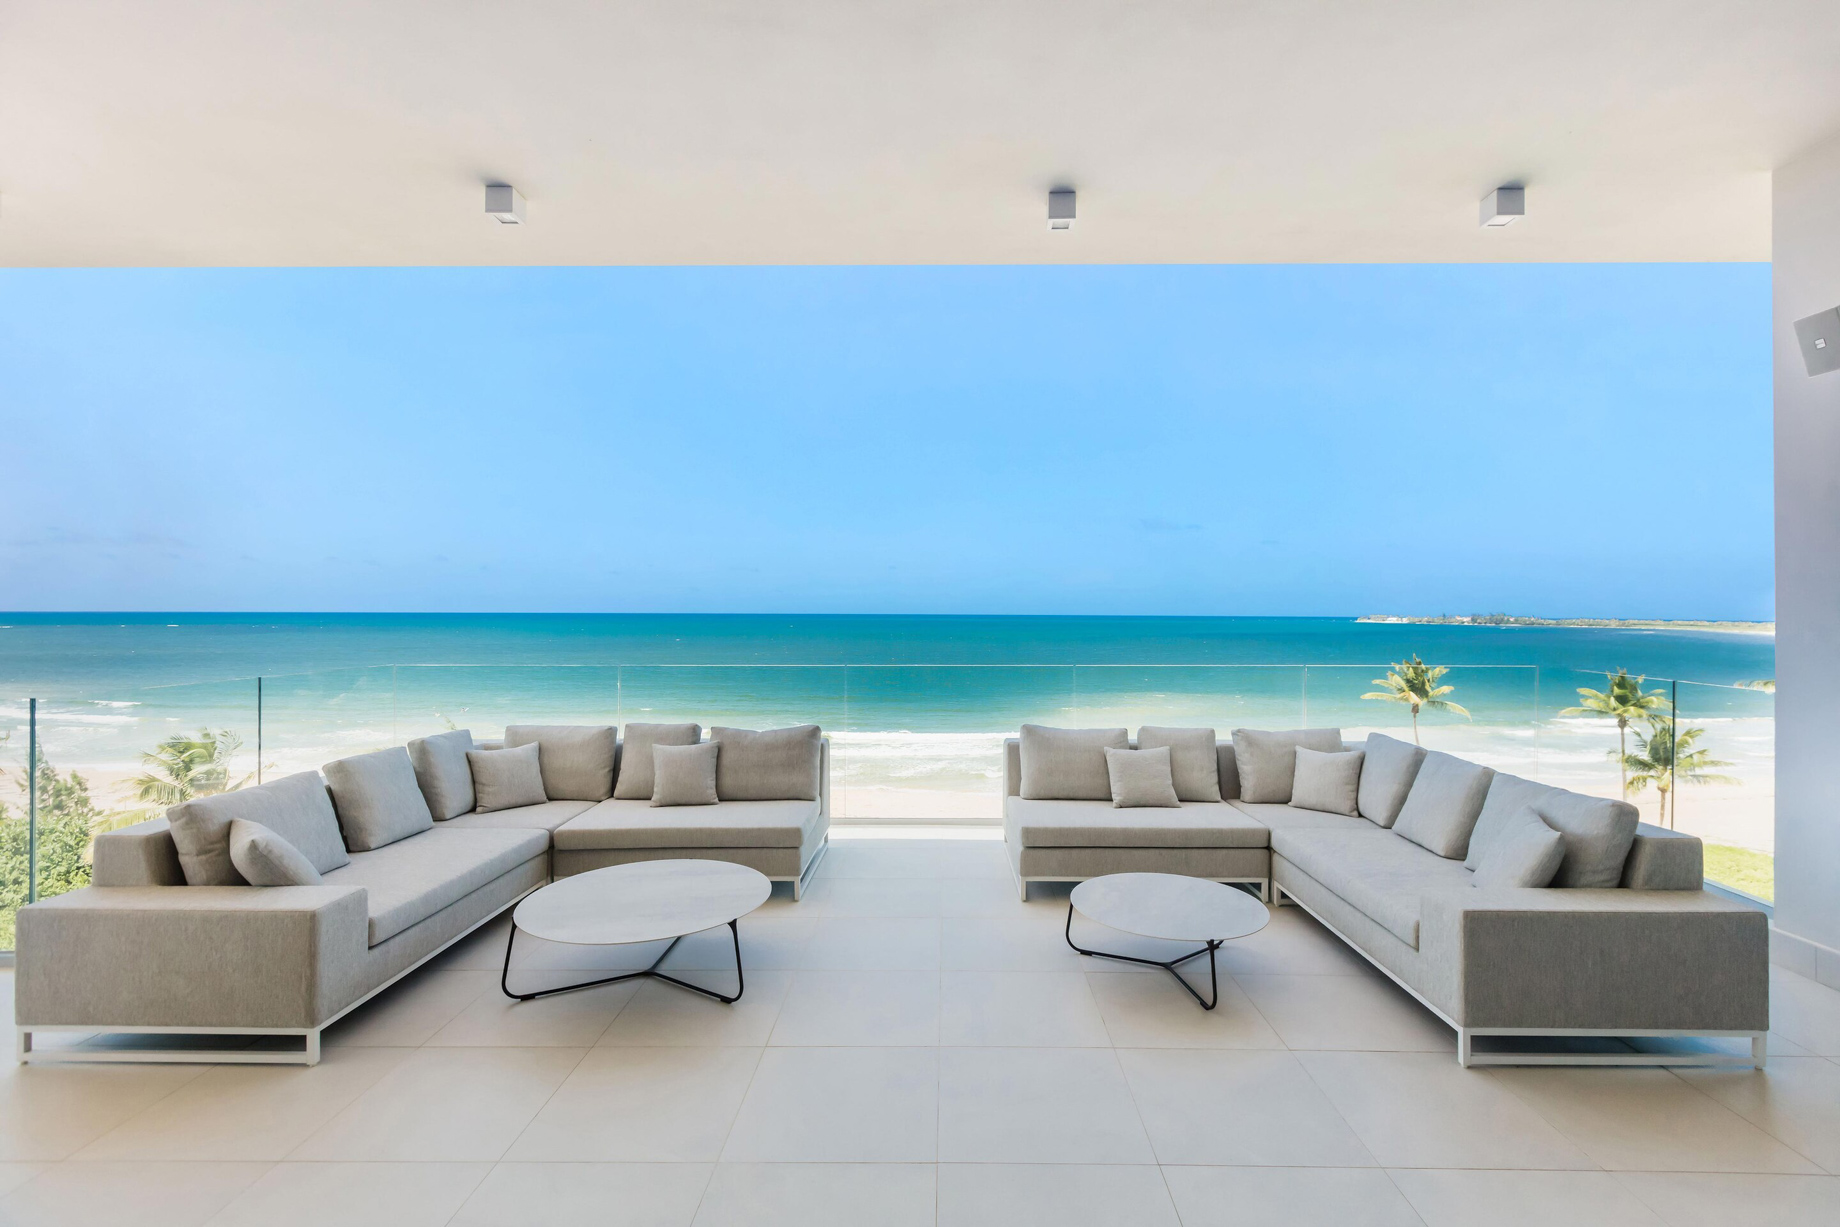 The St. Regis Bahia Beach Resort – Rio Grande, Puerto Rico – Ocean Drive Residences First Level Balcony